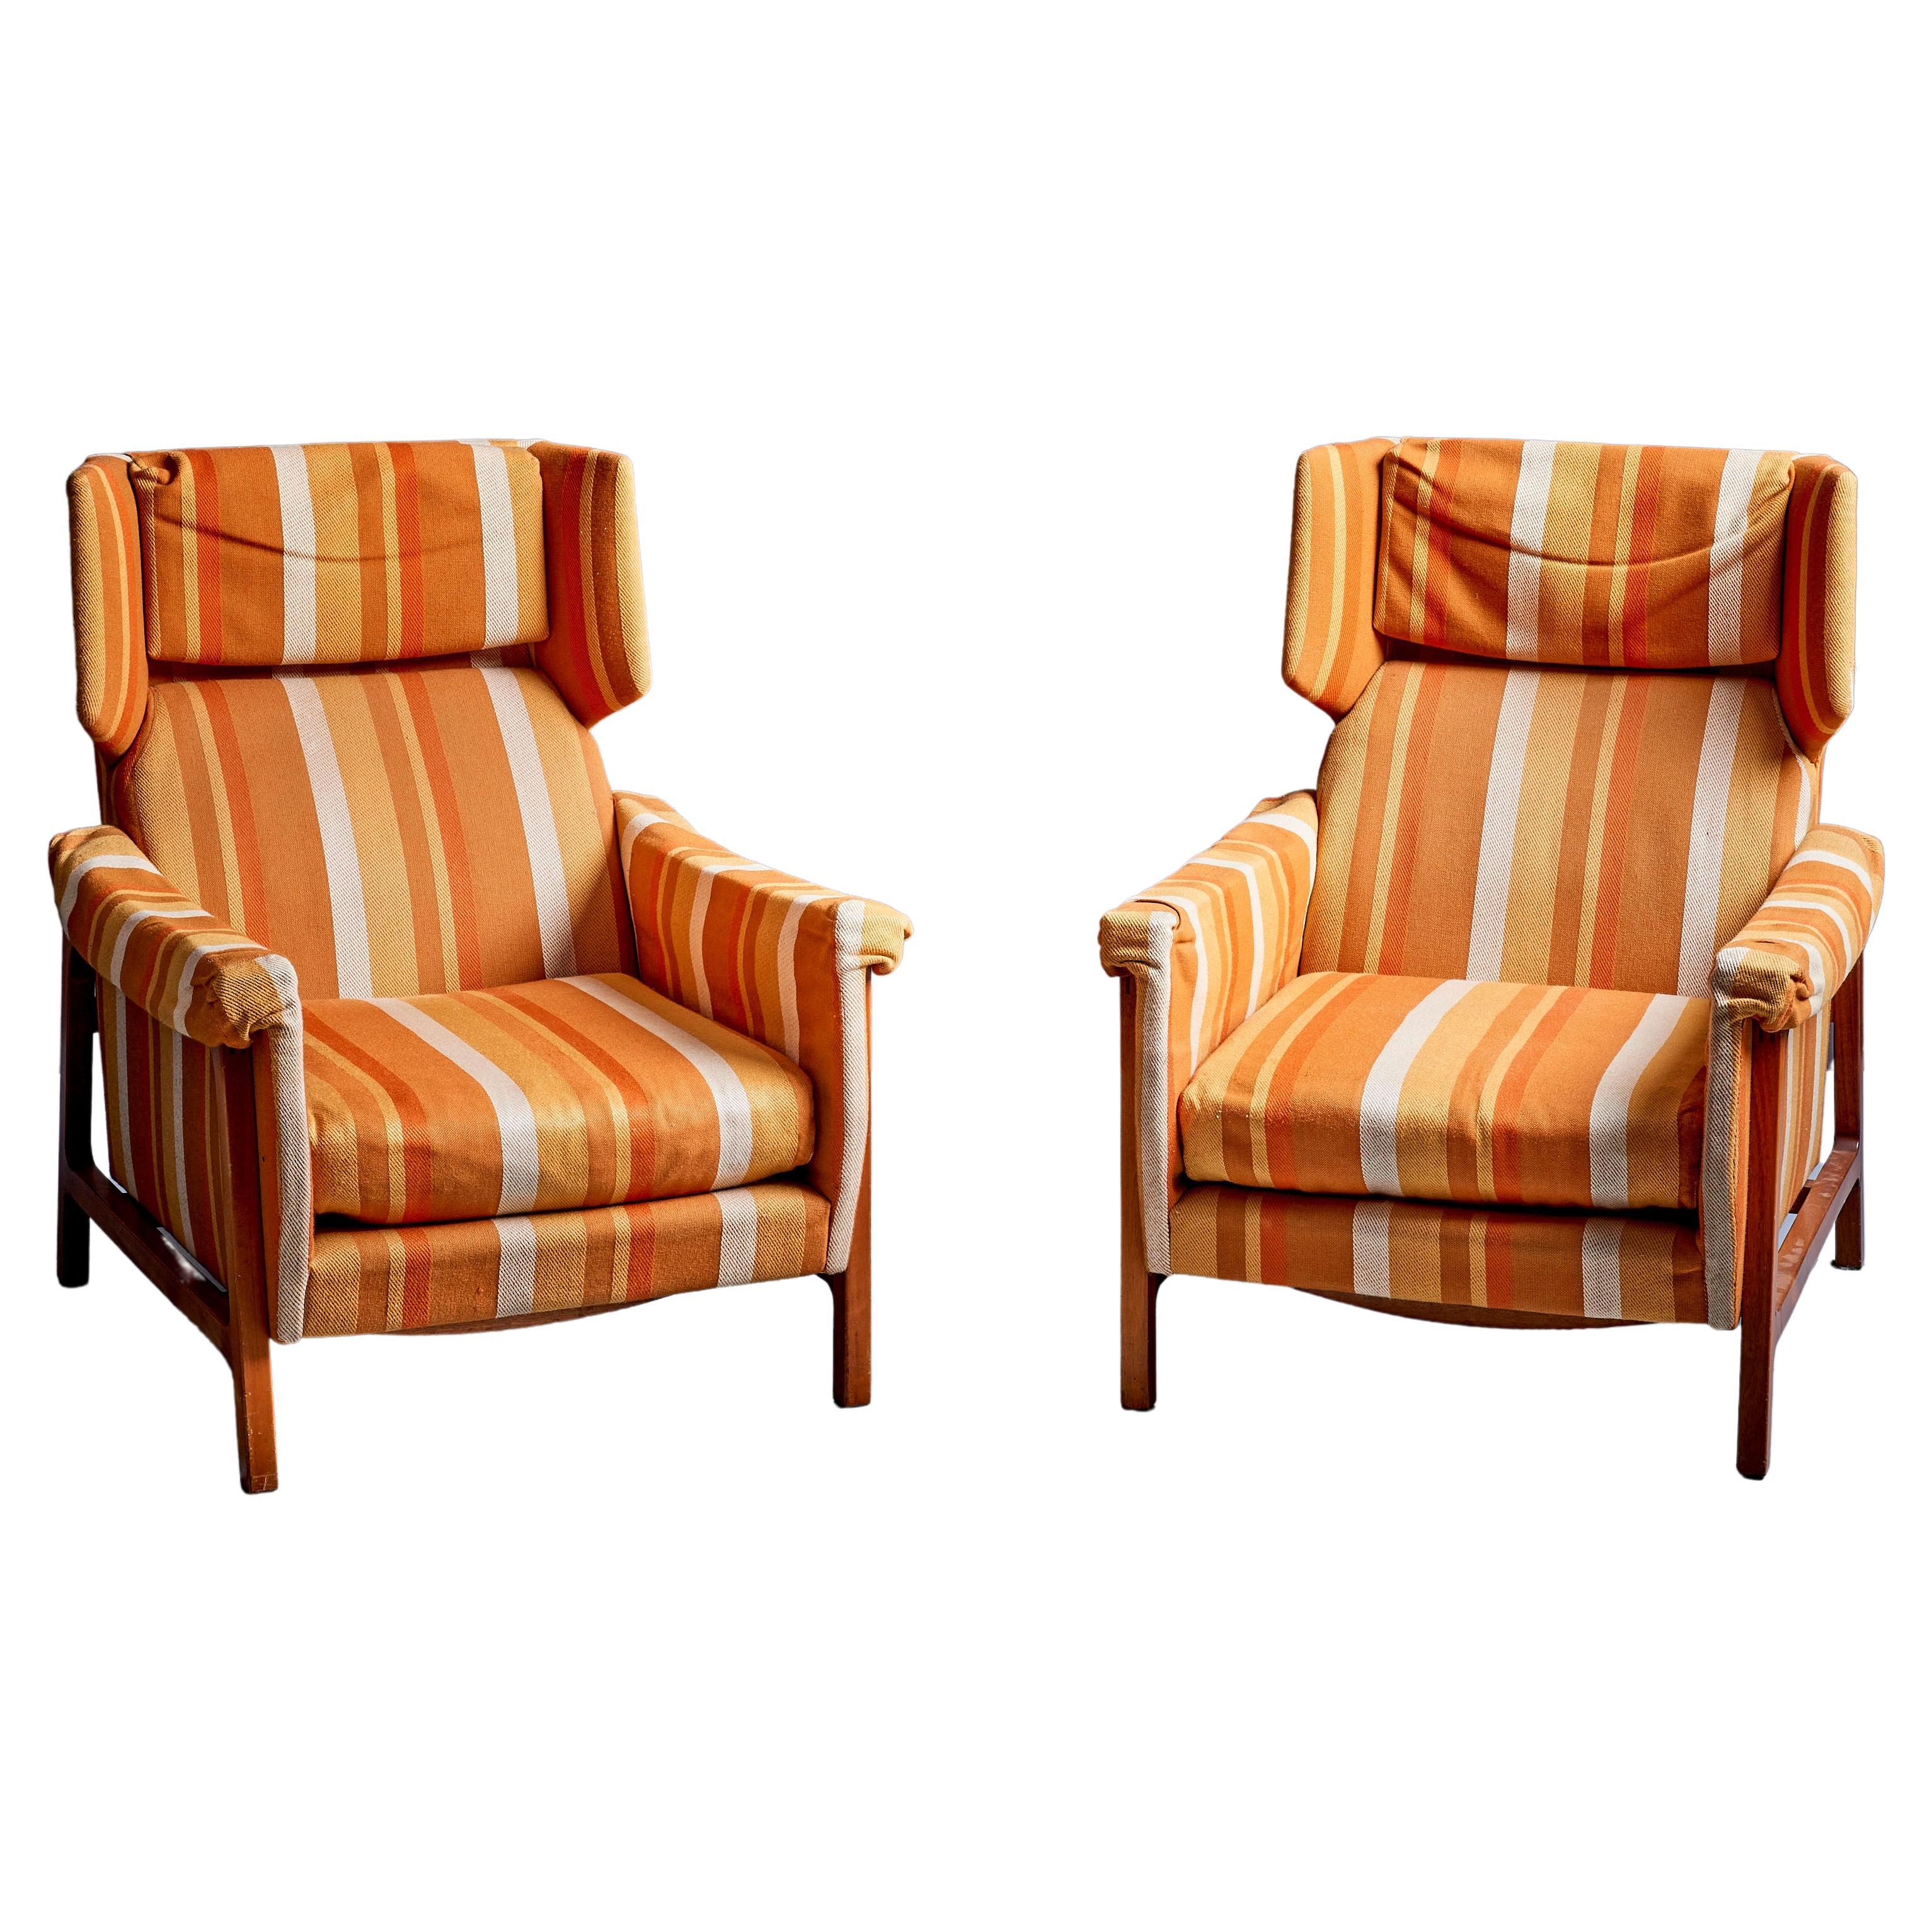 Pair of 2 Original Condition Umberto Colombo & Alberti Reggio Lounge Chairs  